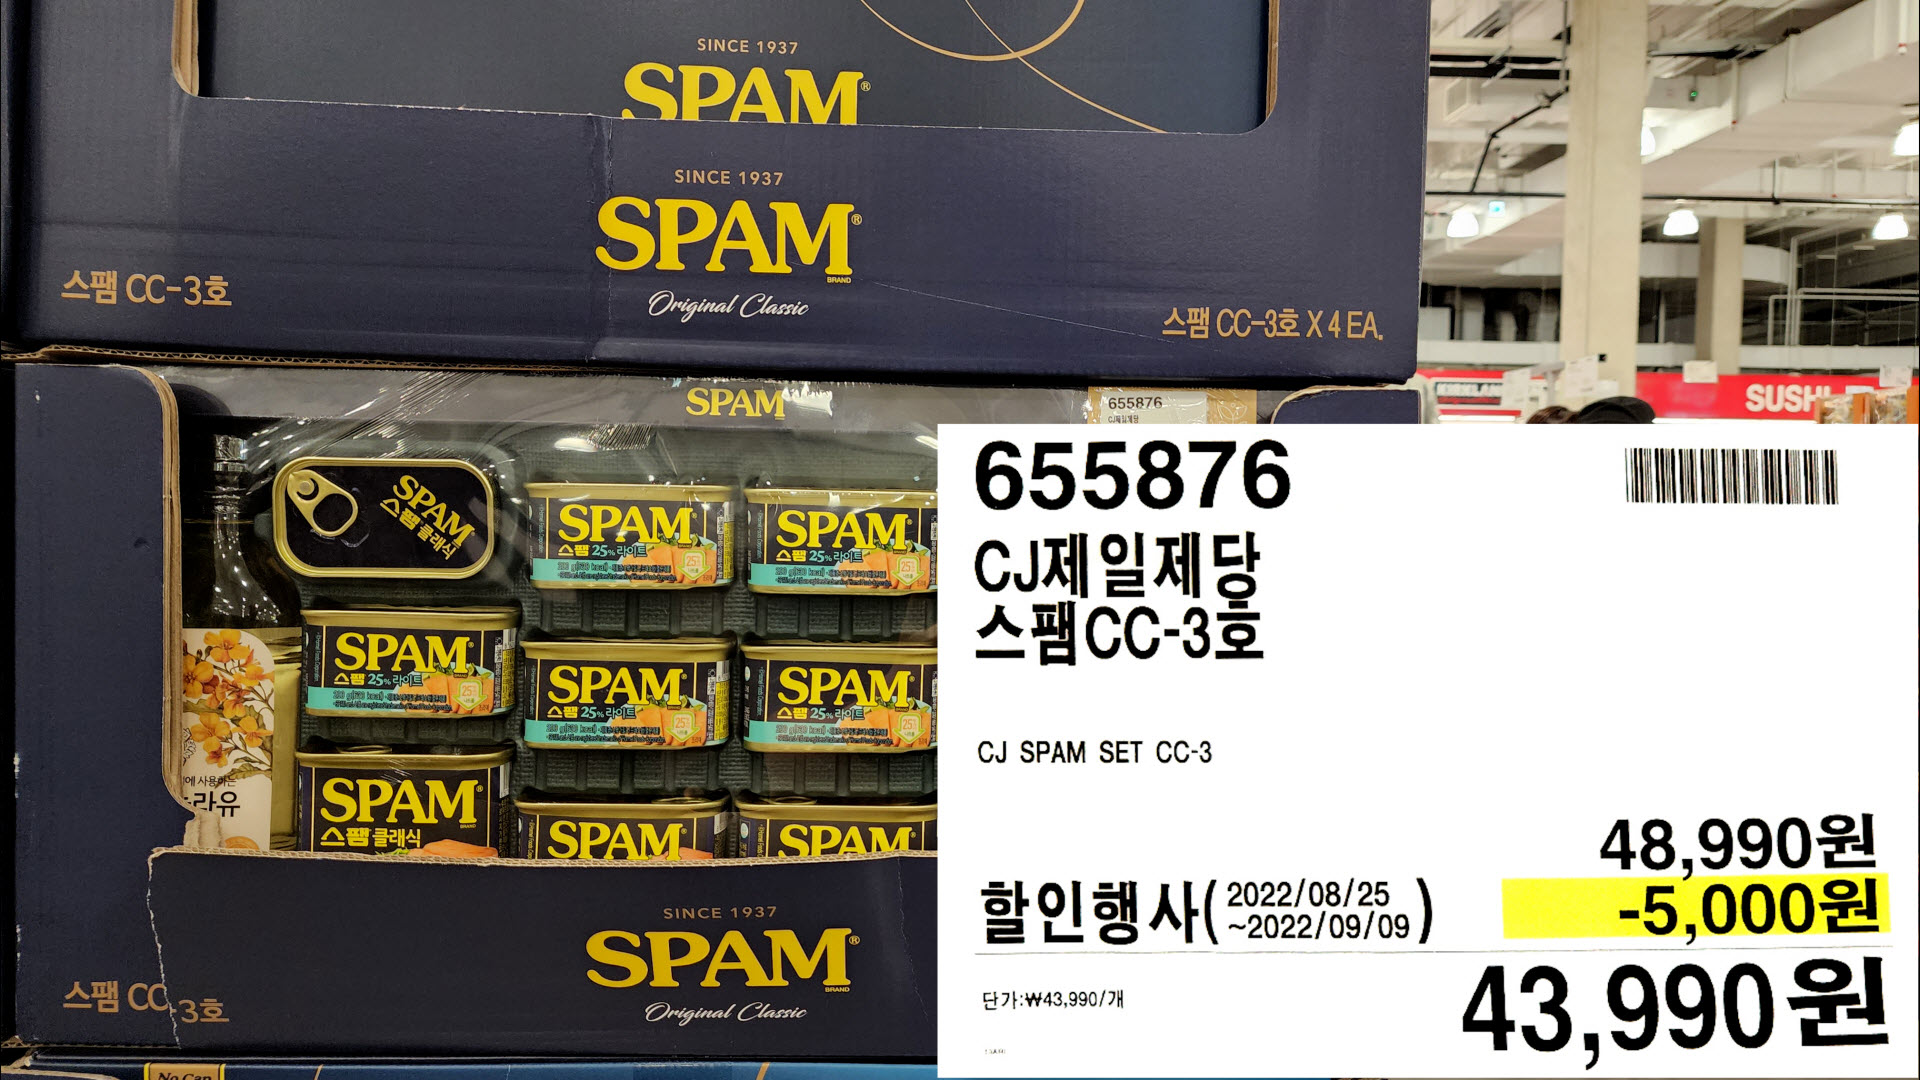 CJ제일제당
스팸CC-3호
CJ SPAM SET CC-3
43,990원